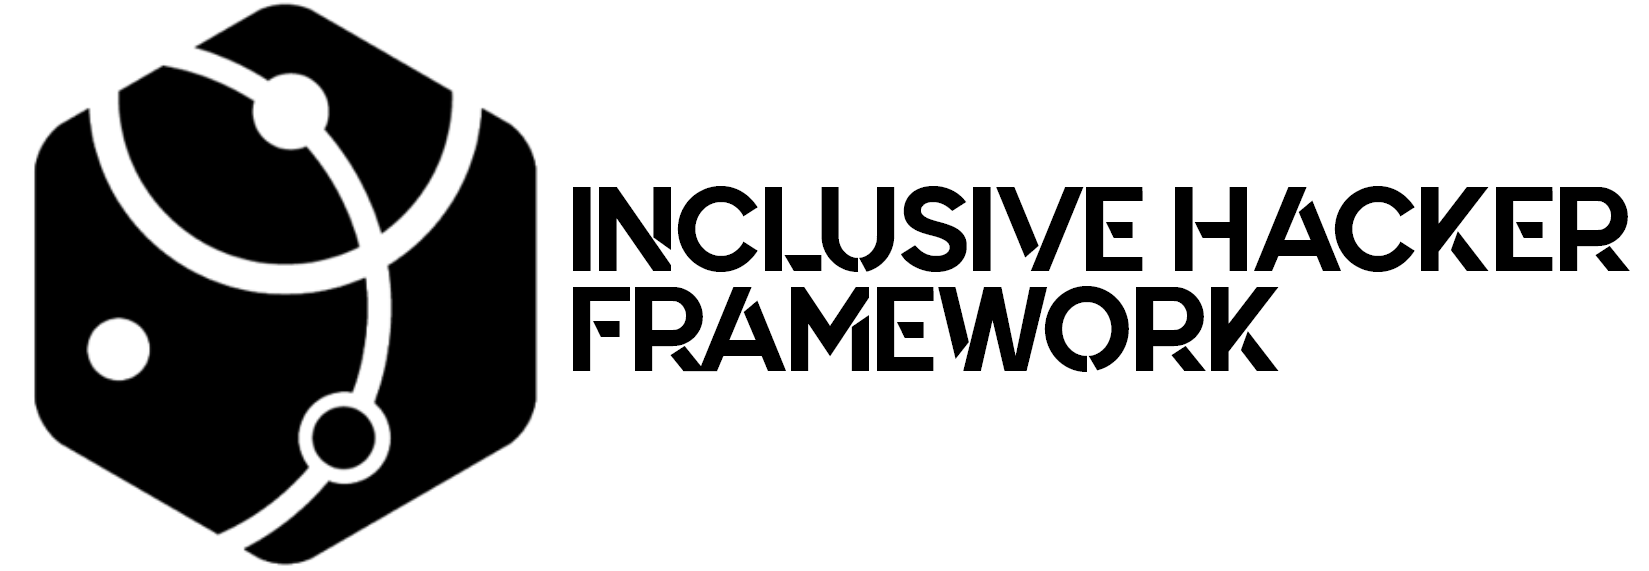 Inclusive Hacker Framework